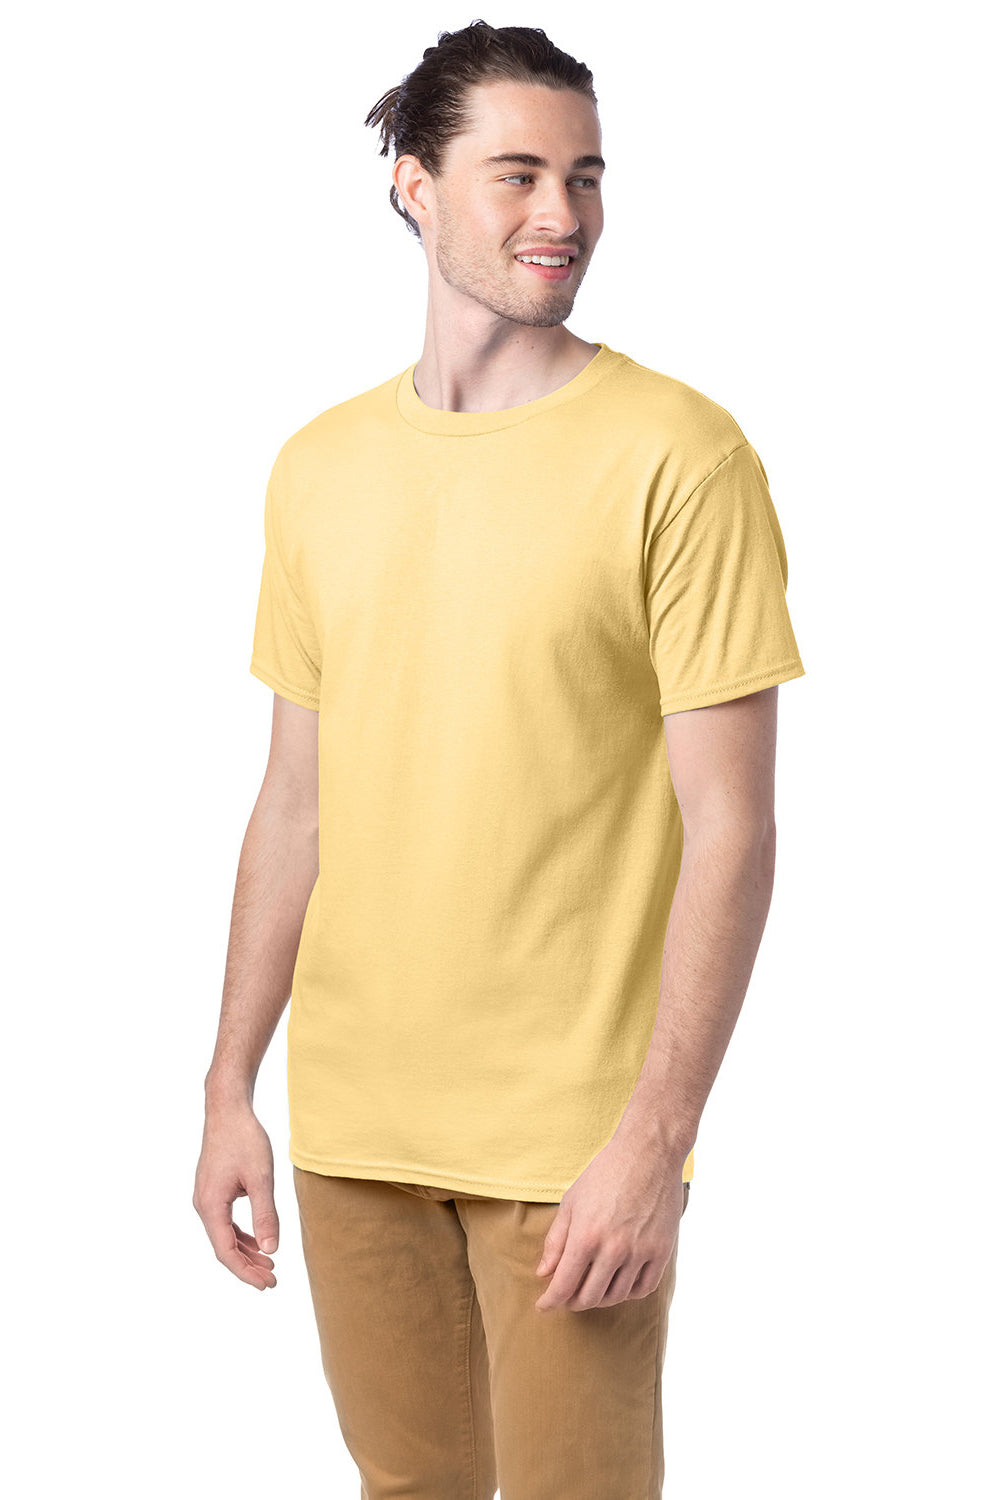 Hanes 5280 Mens ComfortSoft Short Sleeve Crewneck T-Shirt Athletic Gold 3Q